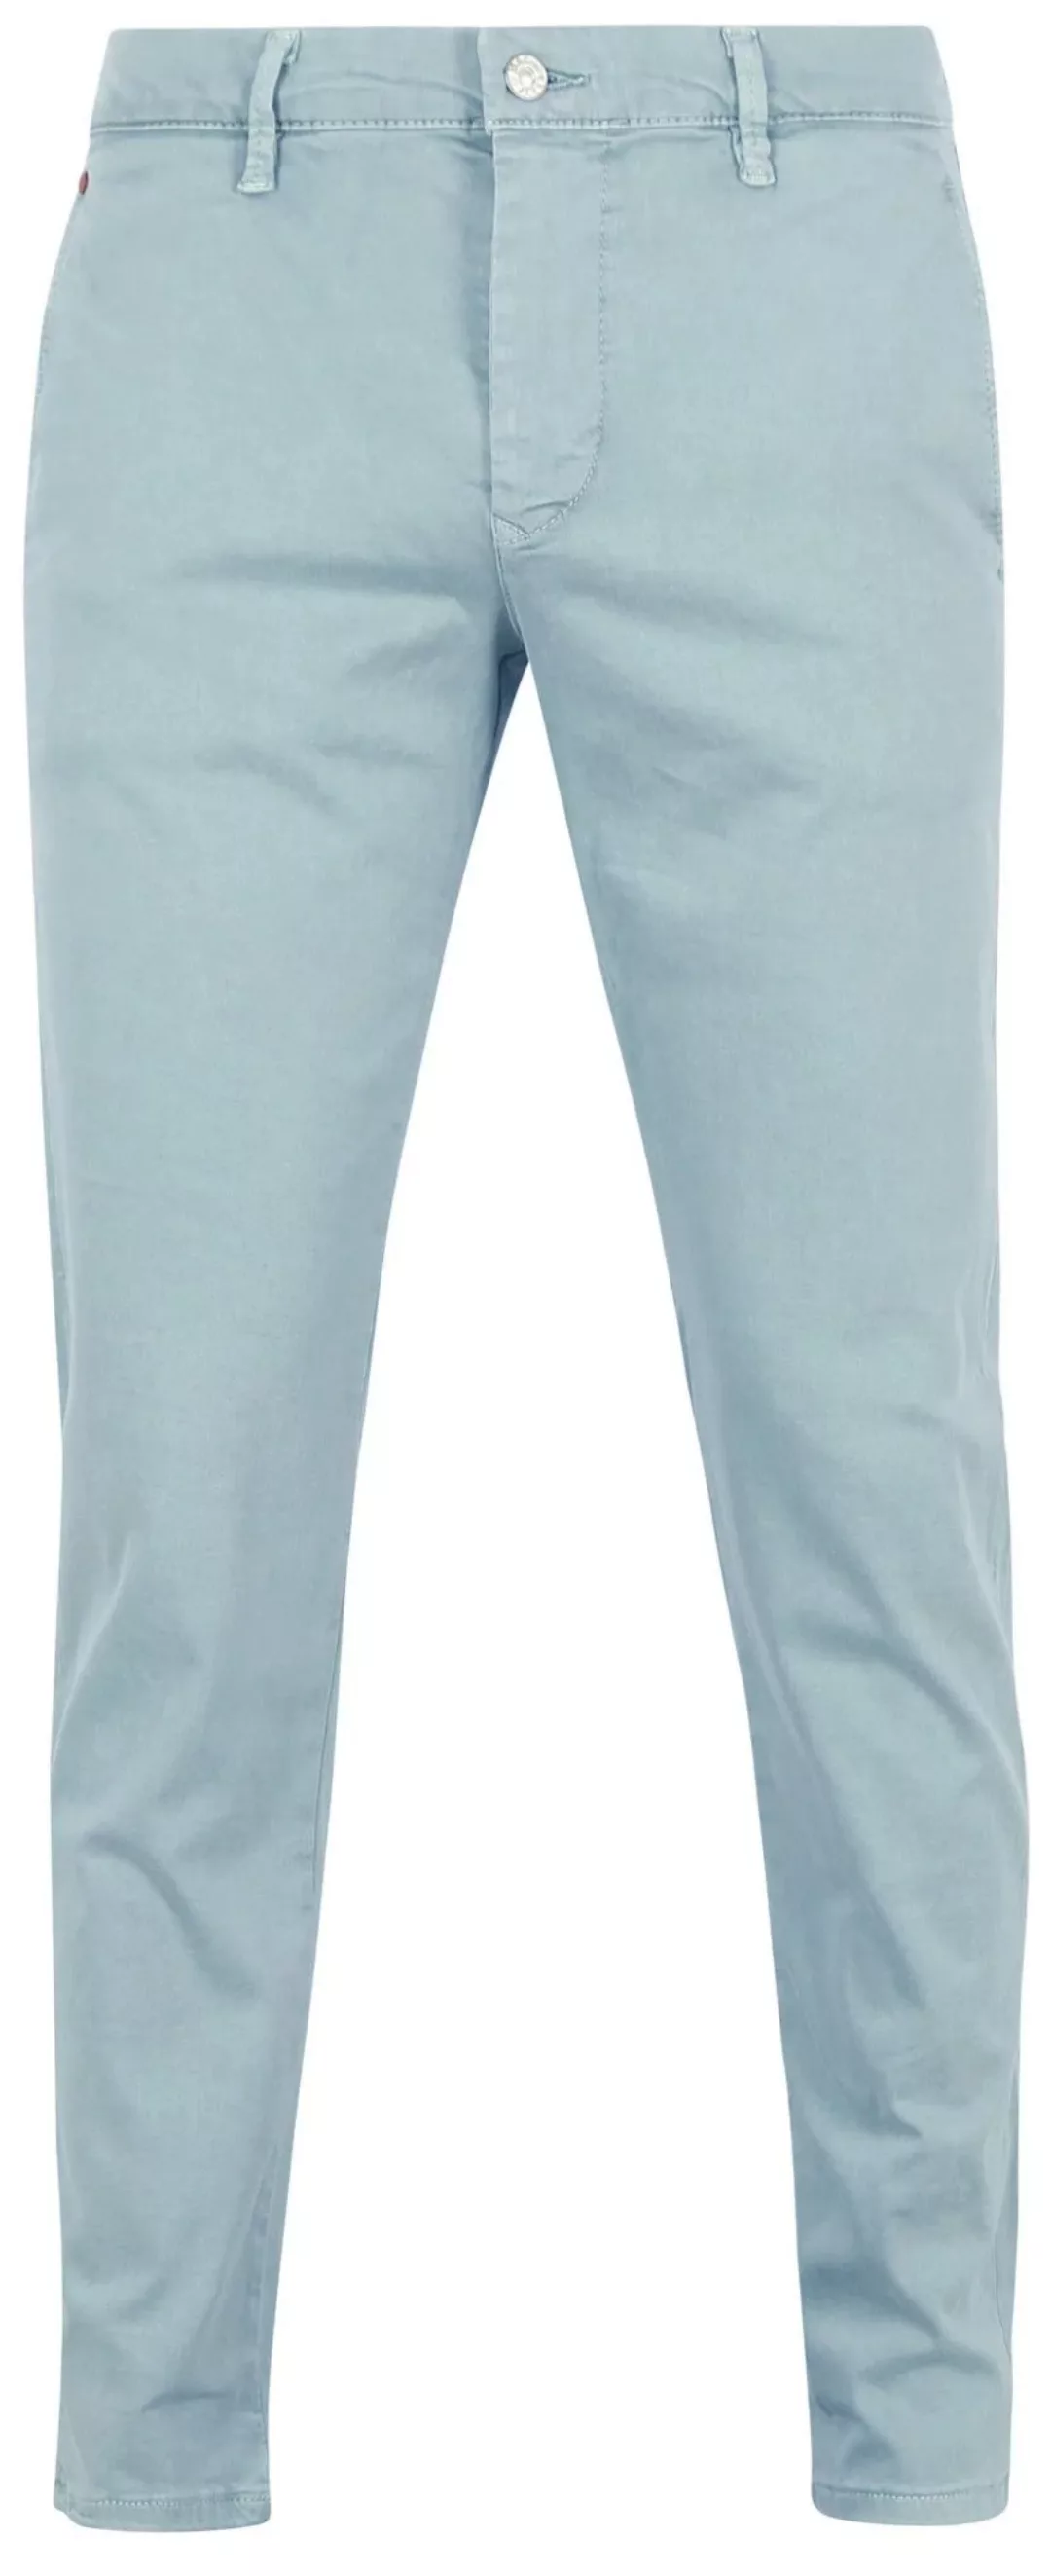 Mac Jeans Driver Pants Hellblau - Größe W 33 - L 36 günstig online kaufen